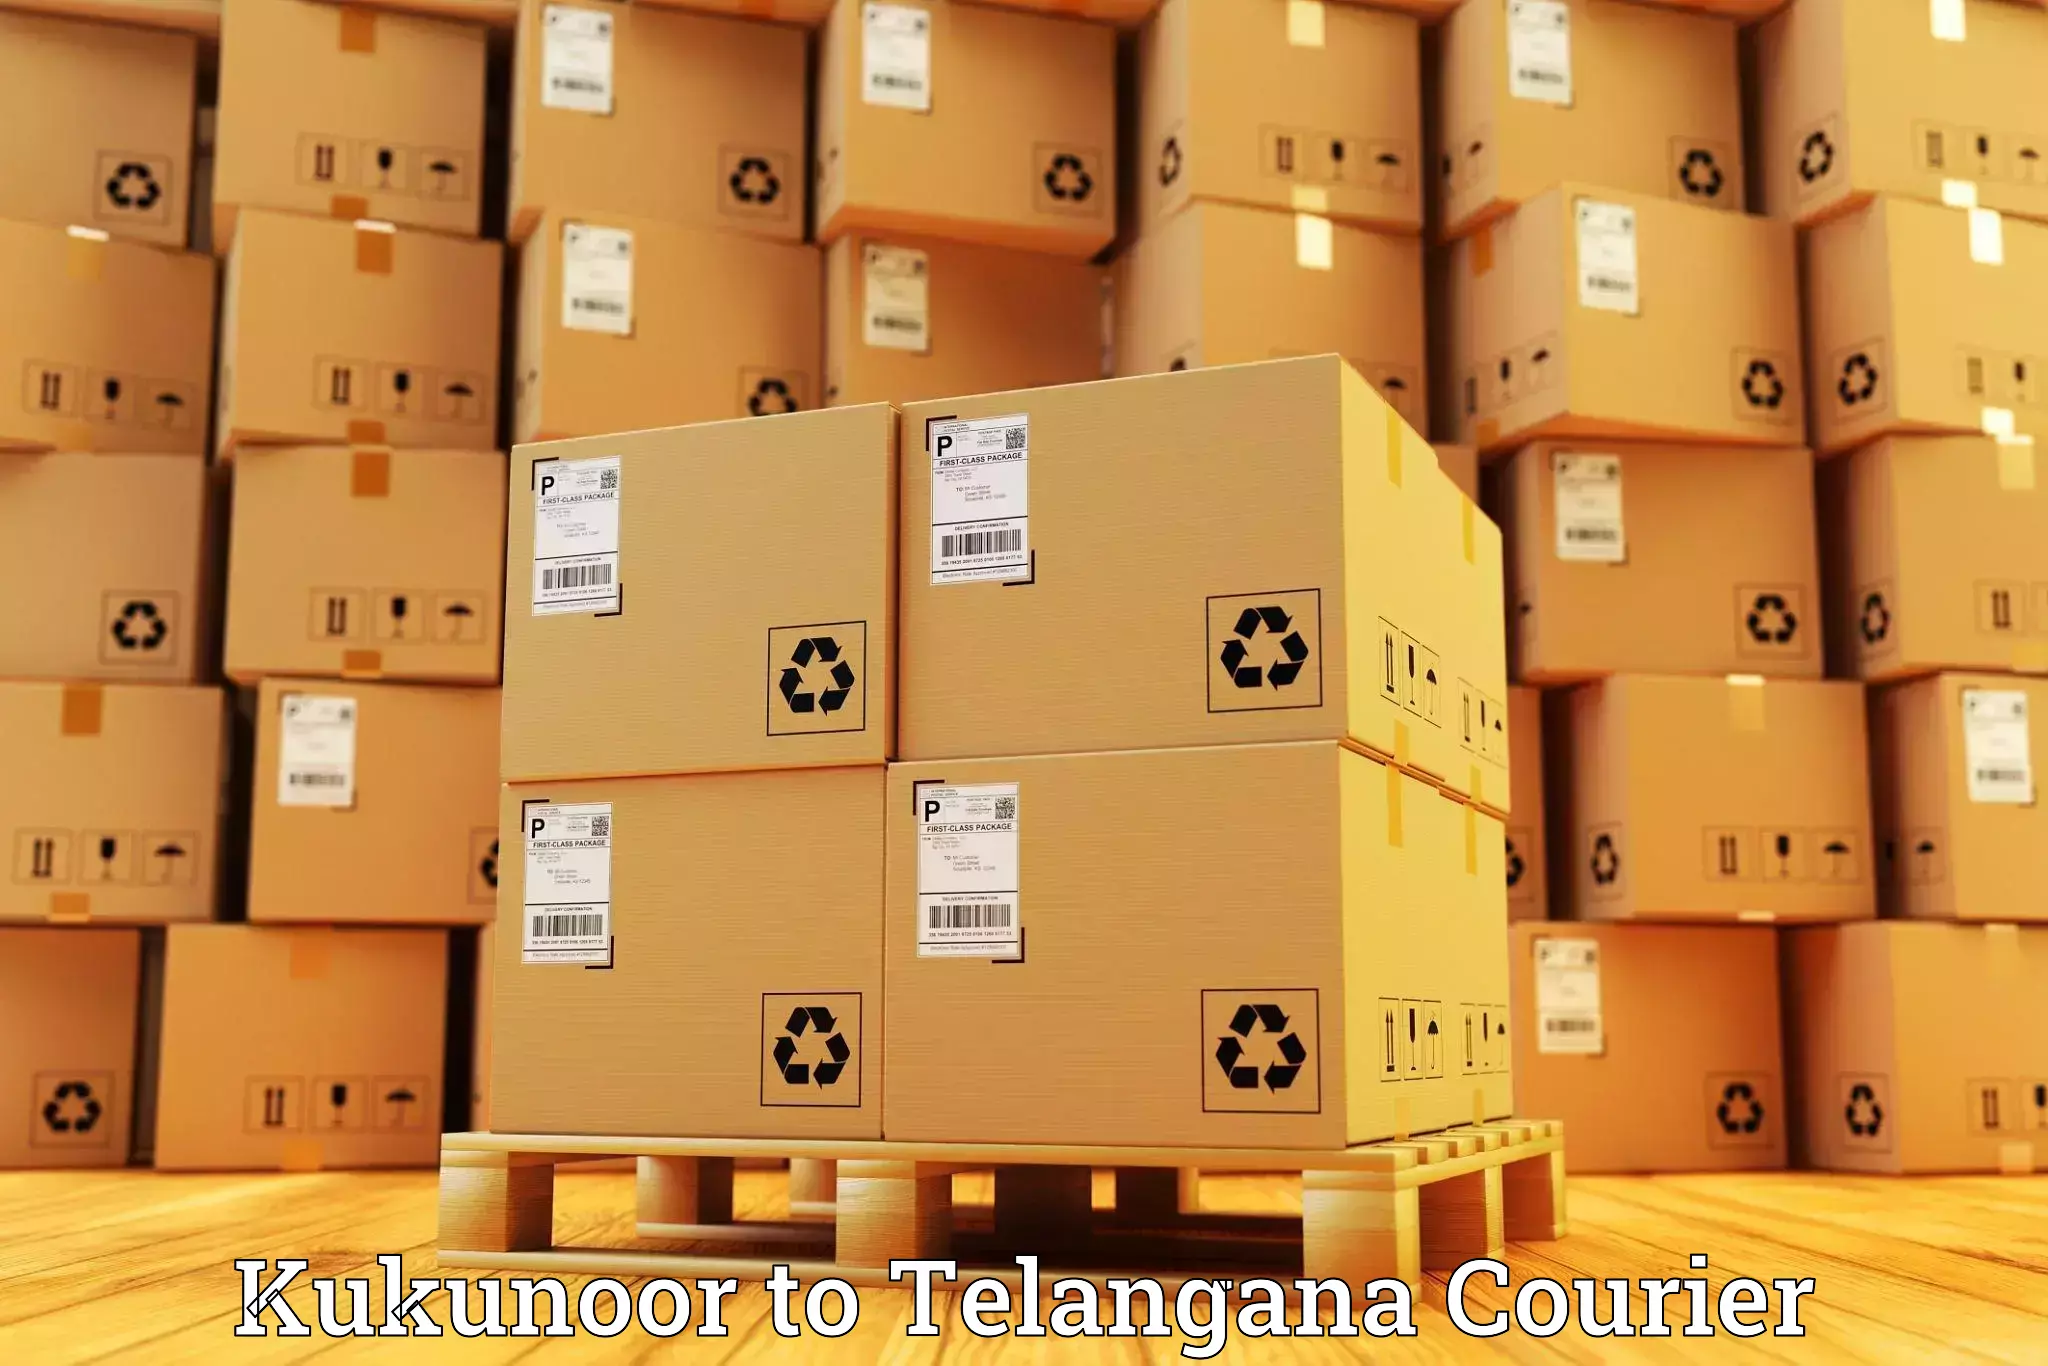 Courier service partnerships in Kukunoor to Khanapur Nirmal